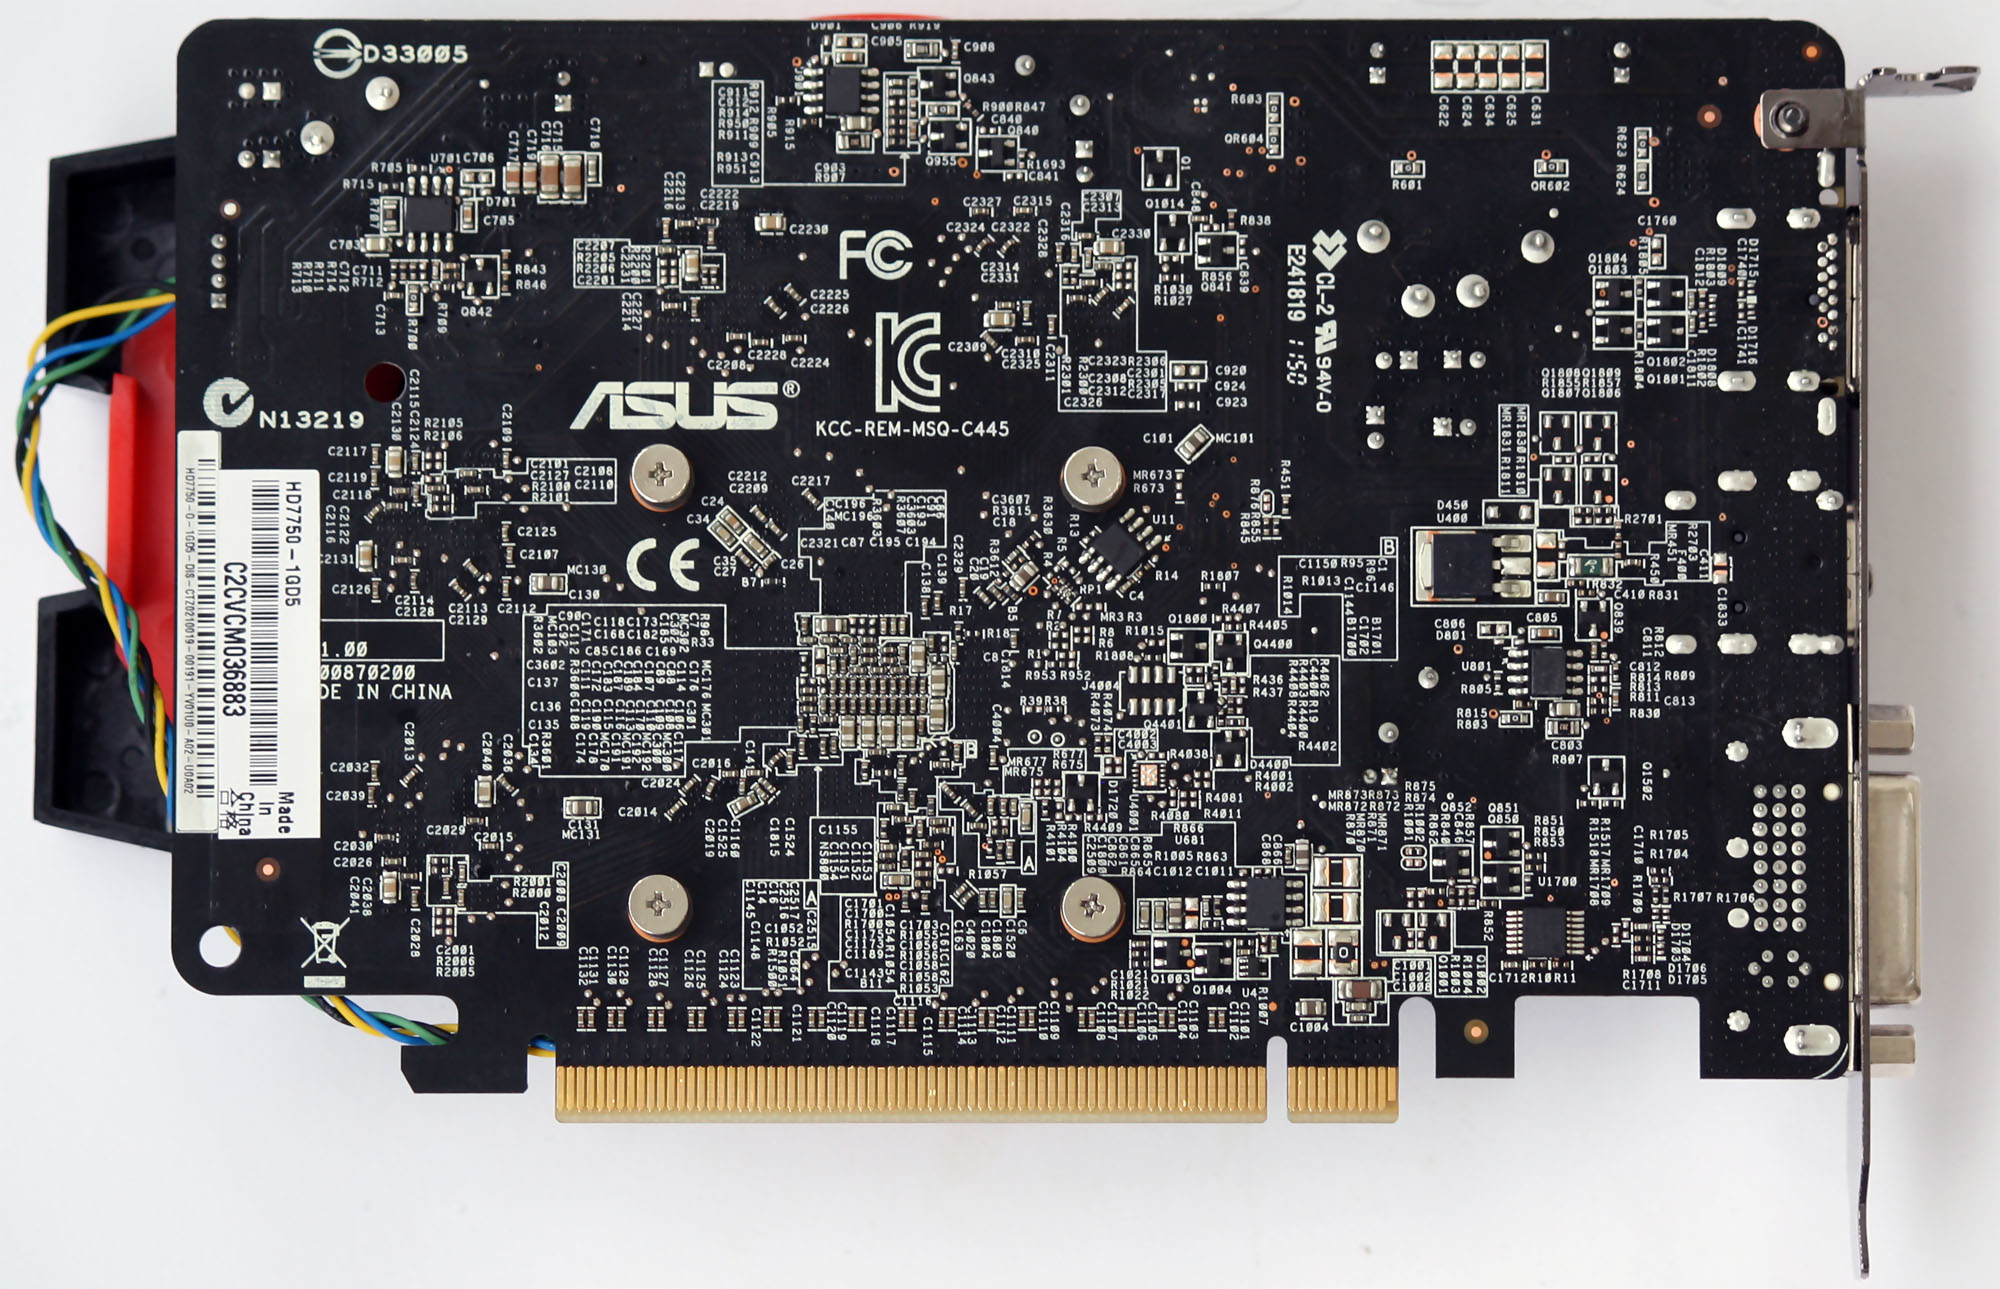 Asus Radeon HD 7750 — úžasně tichý a úsporný